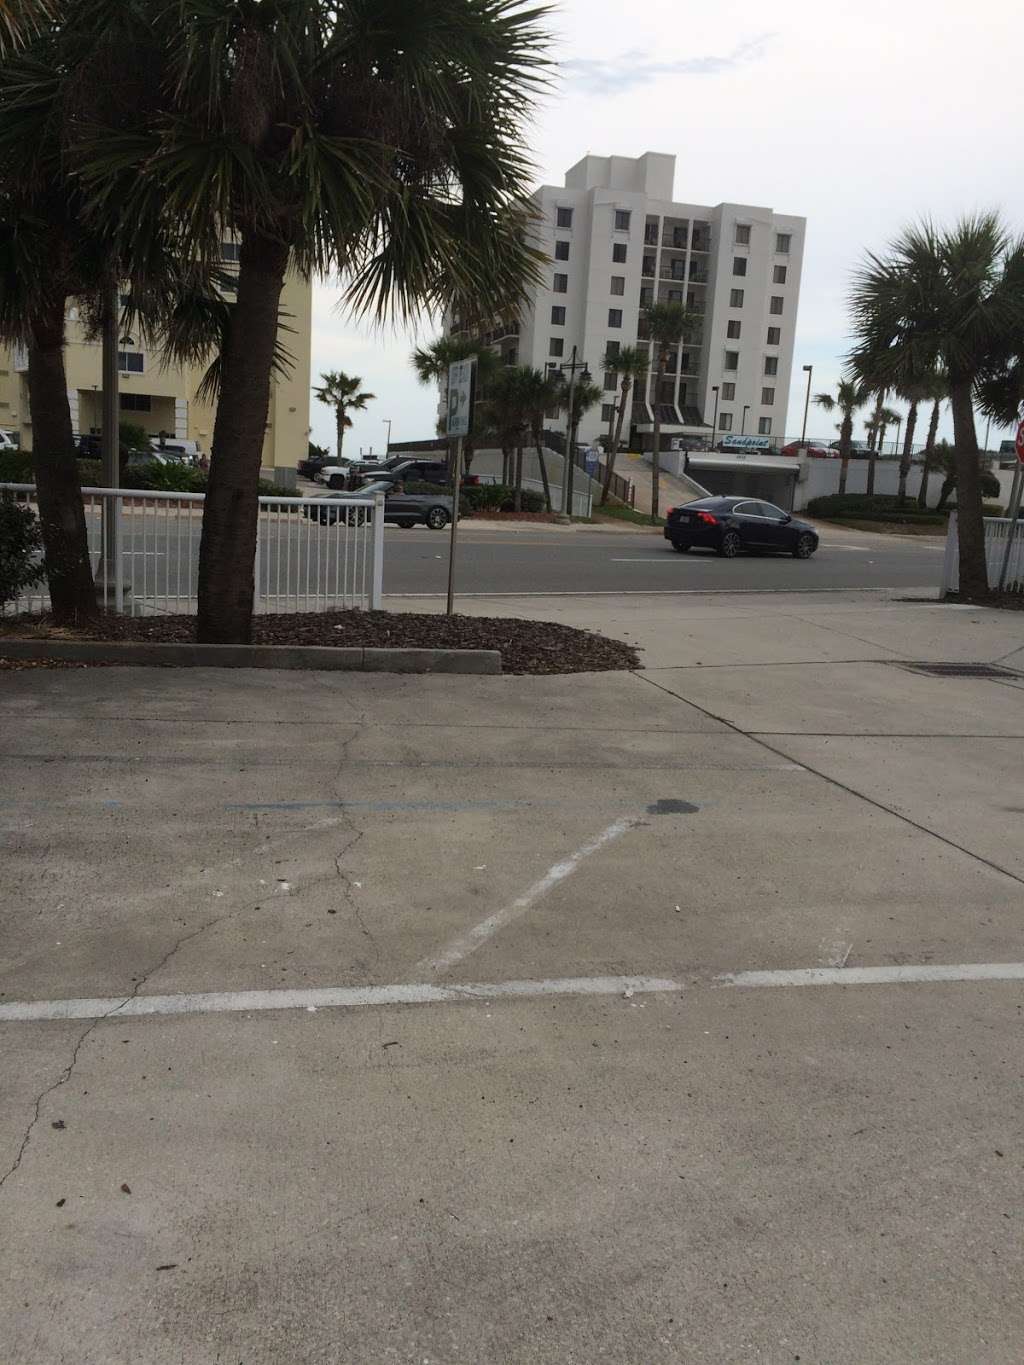 Off Beach Parking | 2608S S Atlantic Ave, Daytona Beach Shores, FL 32118